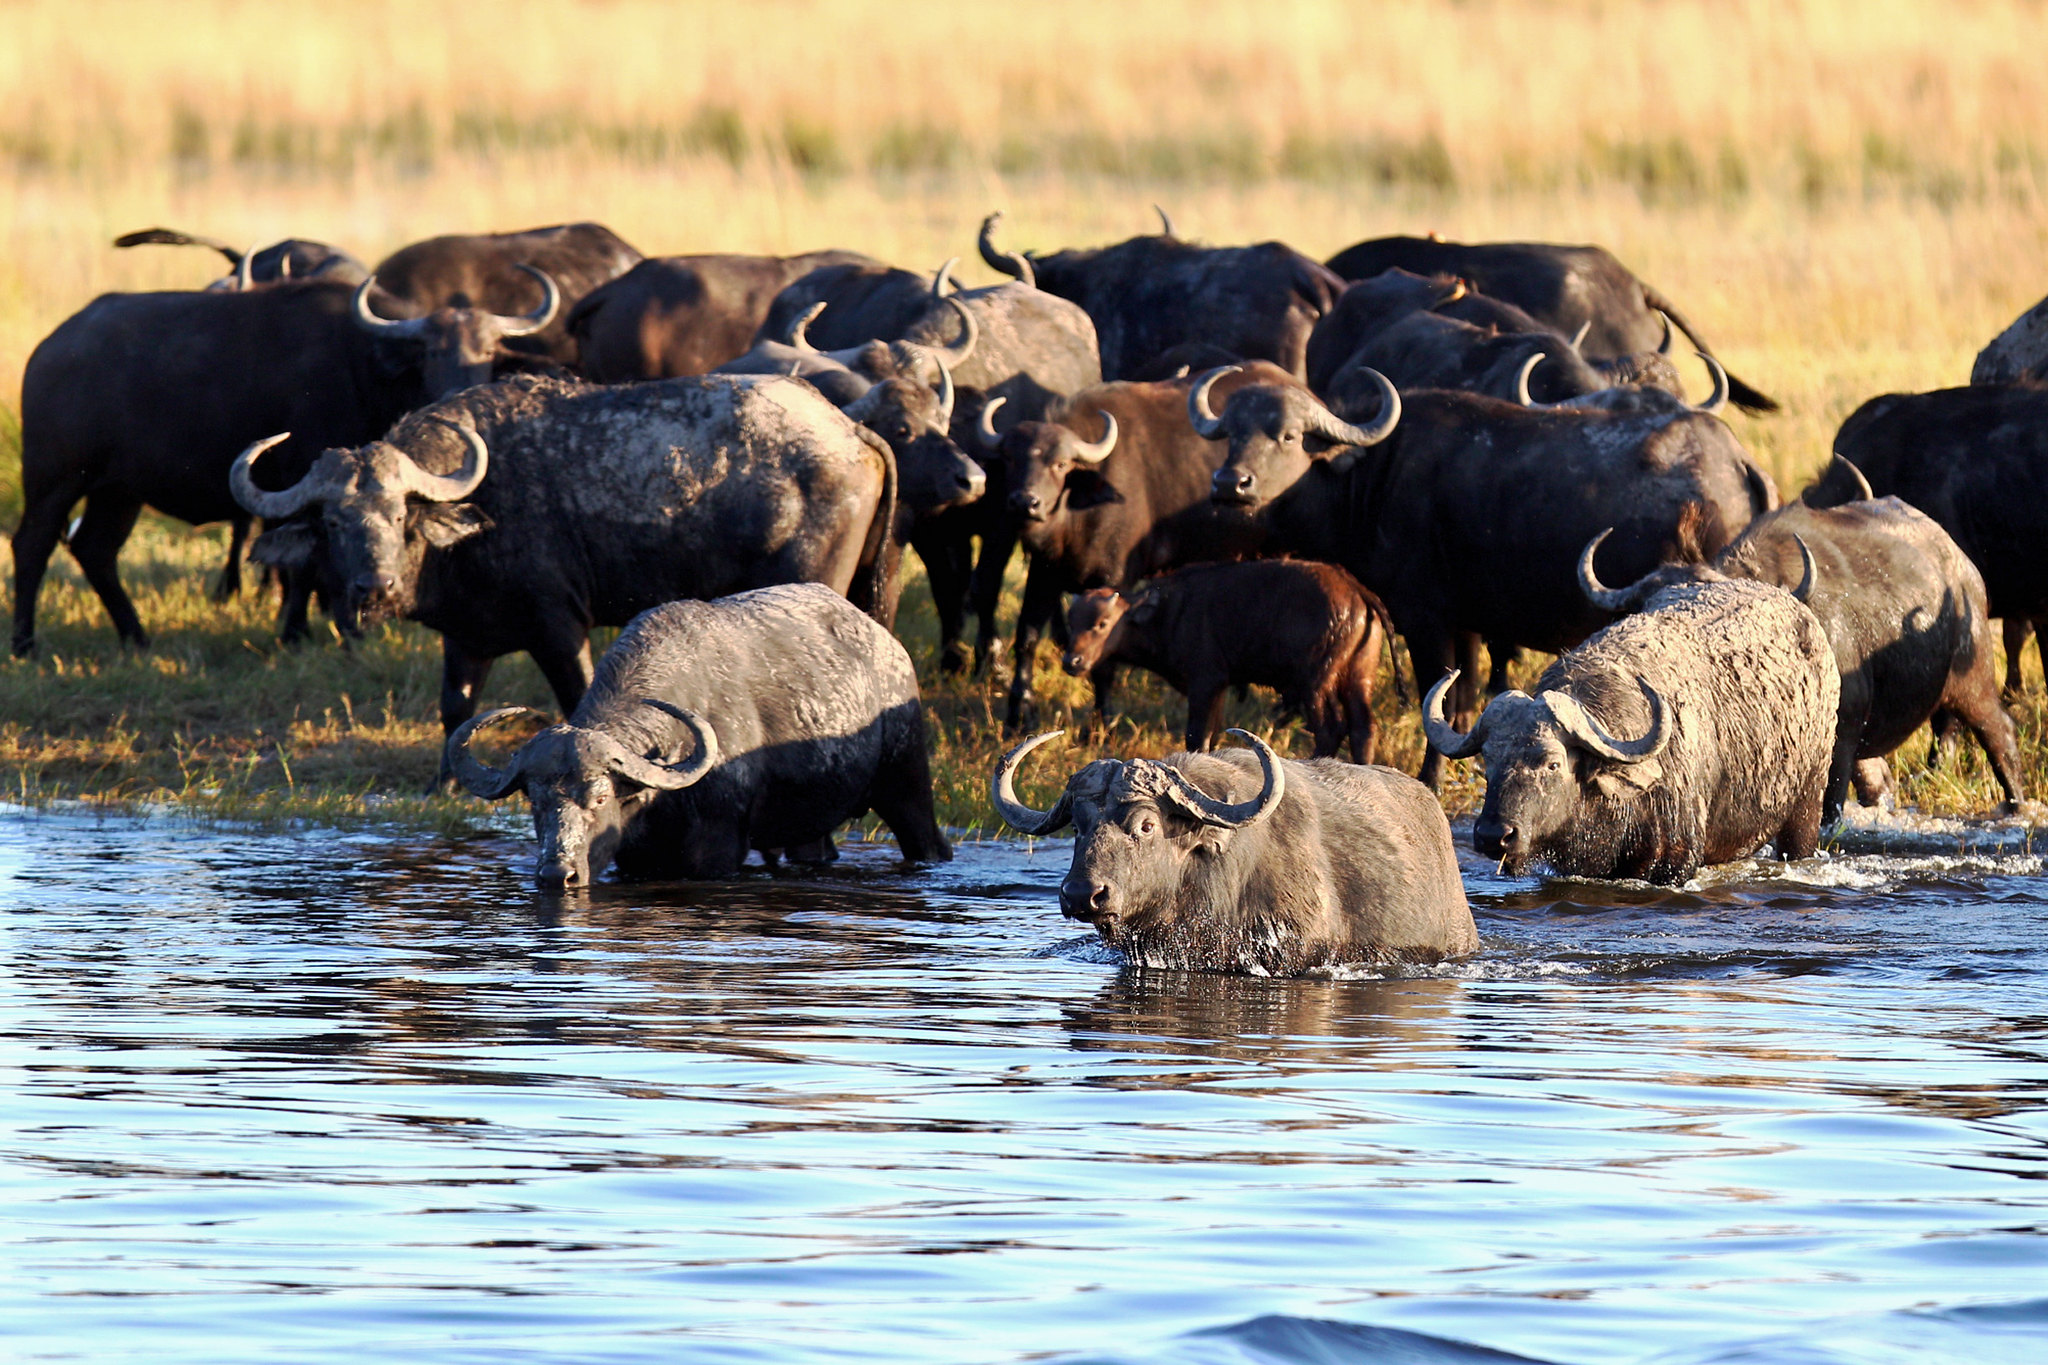 Buffalo - Botswana